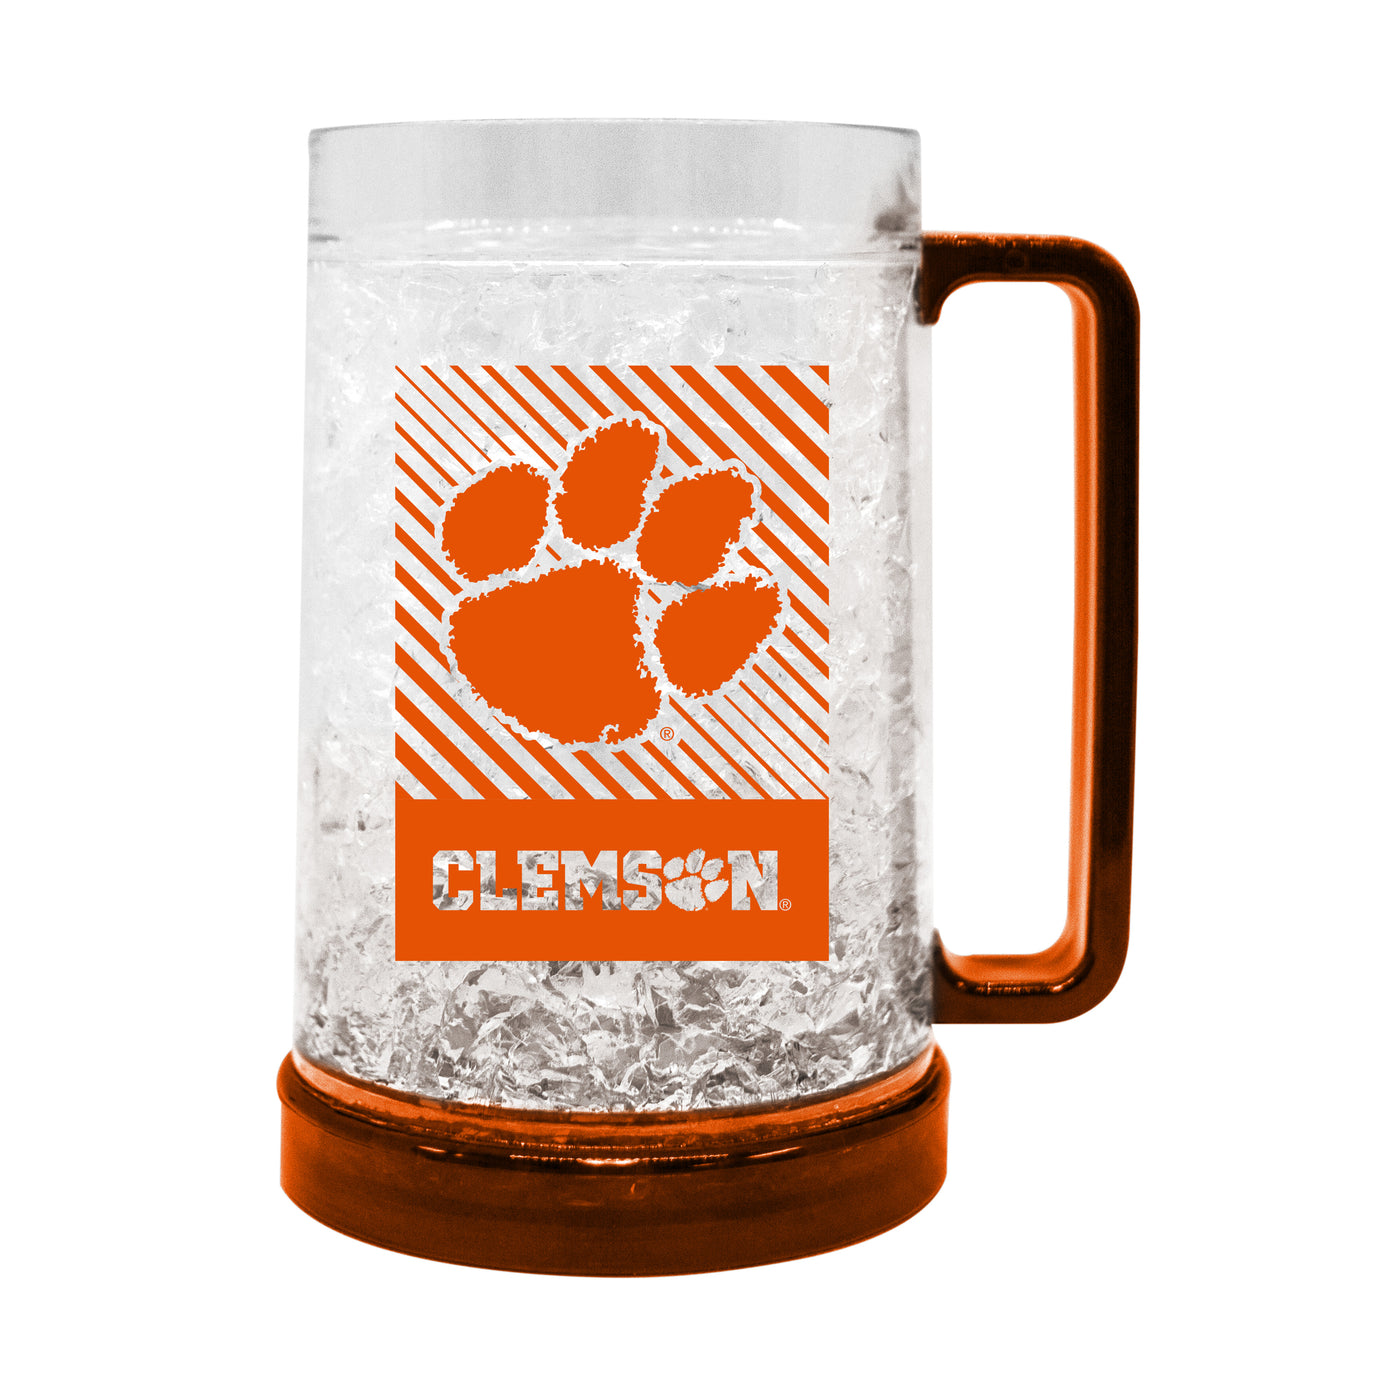 Clemson Freezer Mug